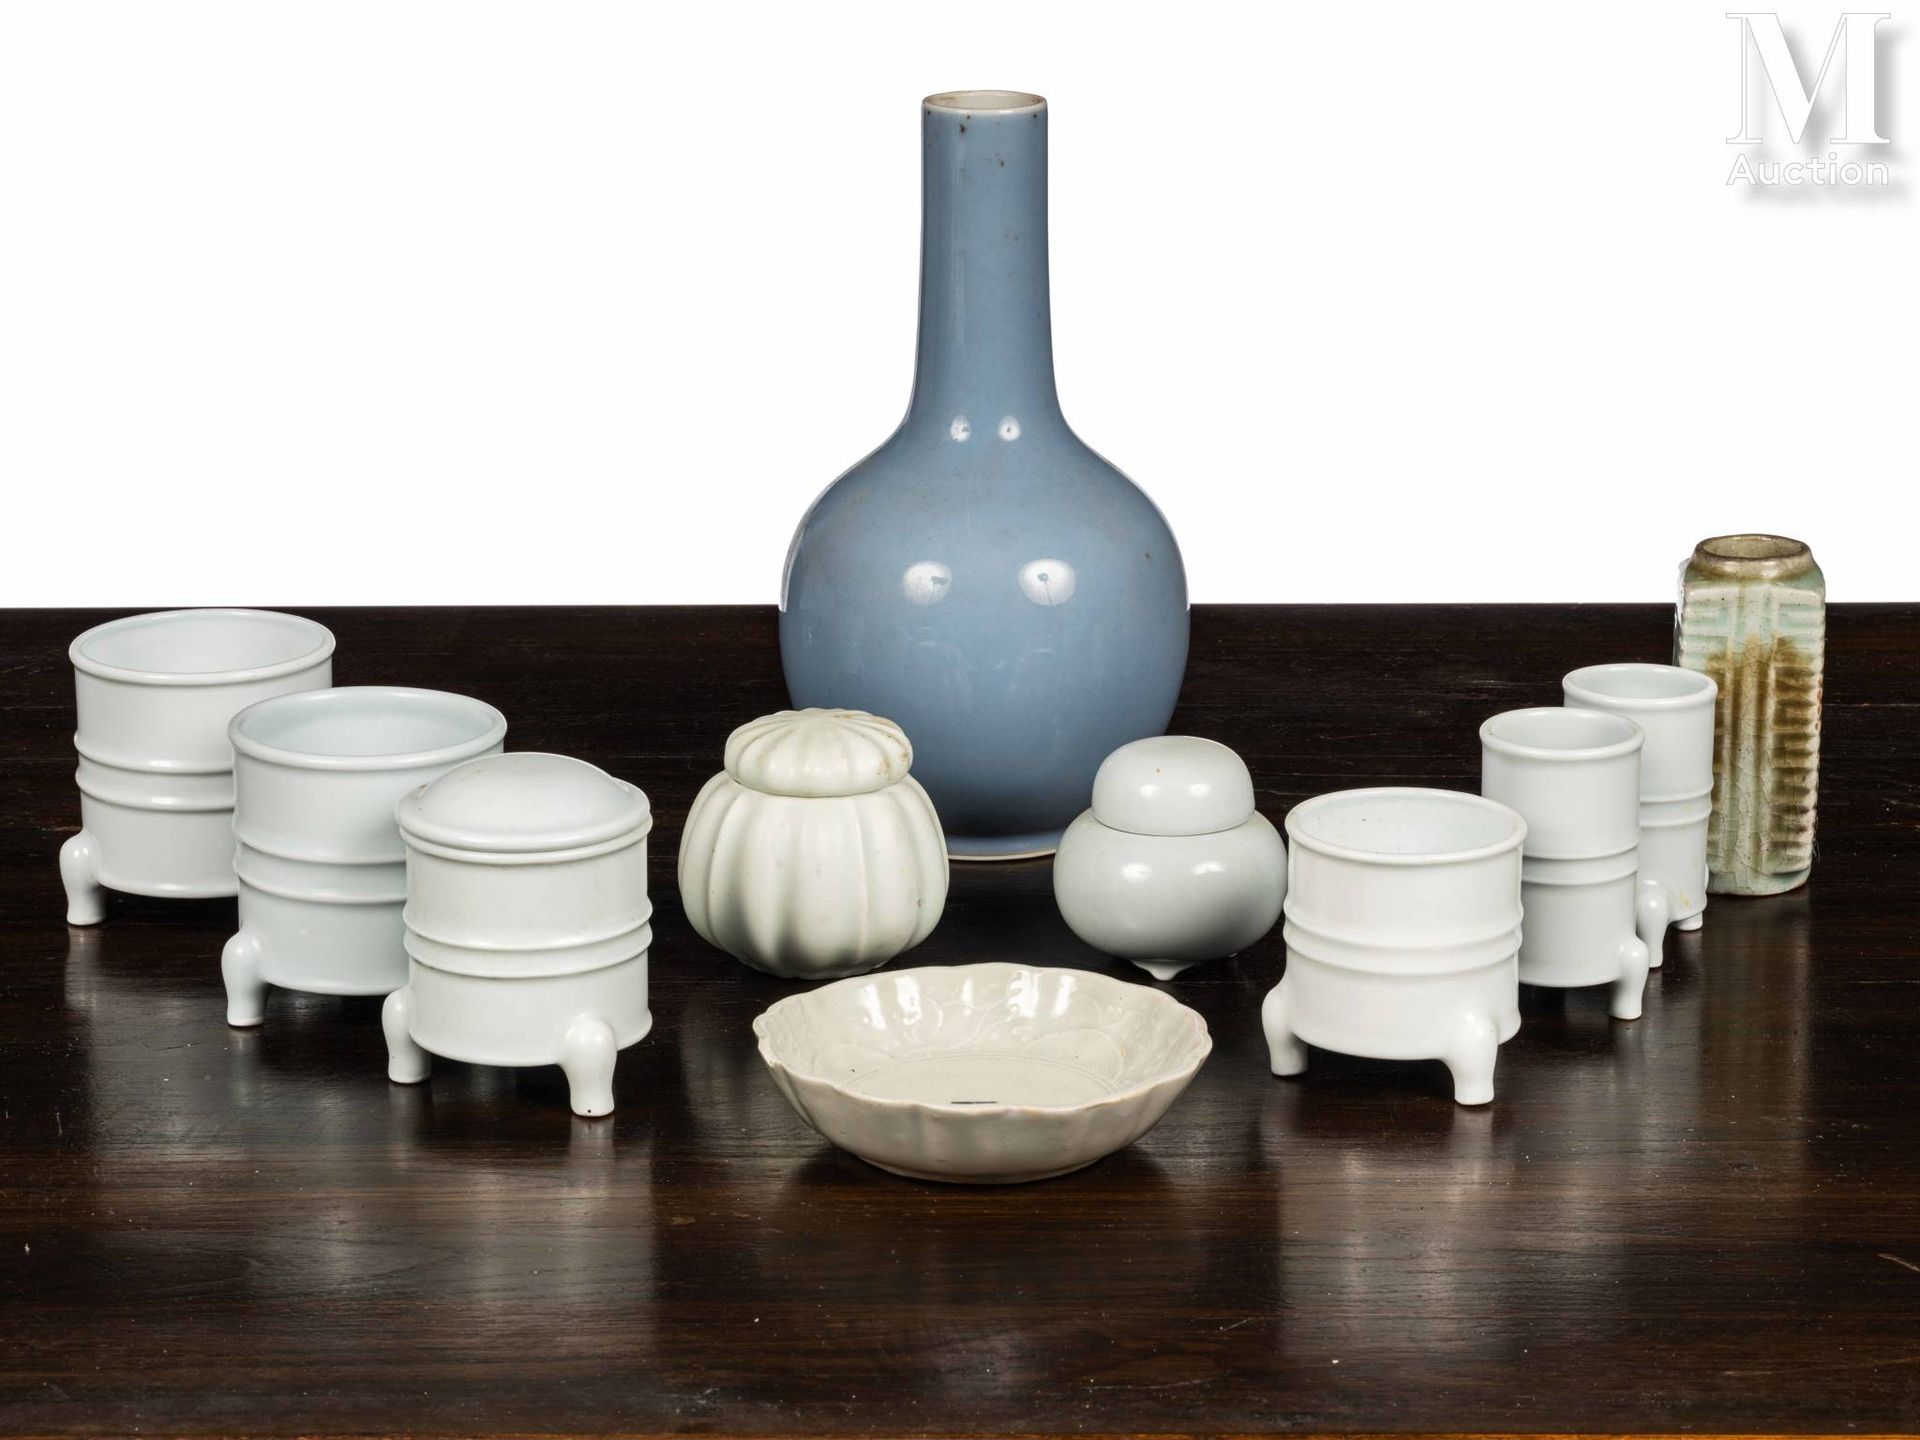 CHINE, XXe siècle 一套11件瓷器，包括一个月光瓷球状花瓶，六个三脚架刷子，一个盘子，两个盖子和一个Cong花瓶。

高度：6至24厘米之间